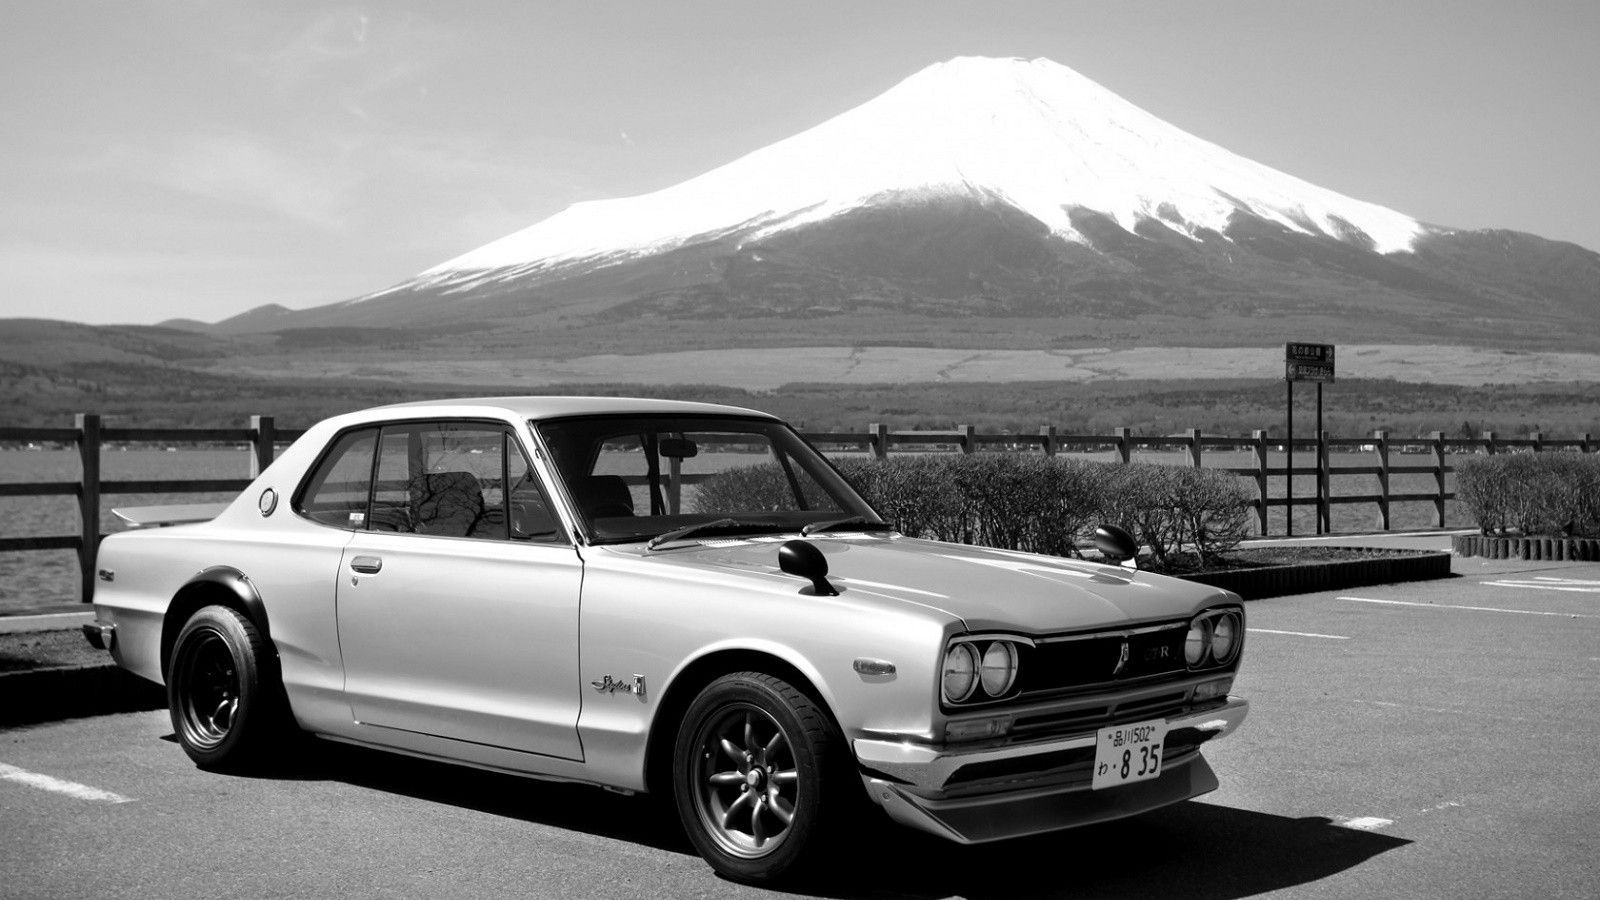 Nissan Skyline 2000 GT R In Front Of Mount Fuji [1600x900] HD